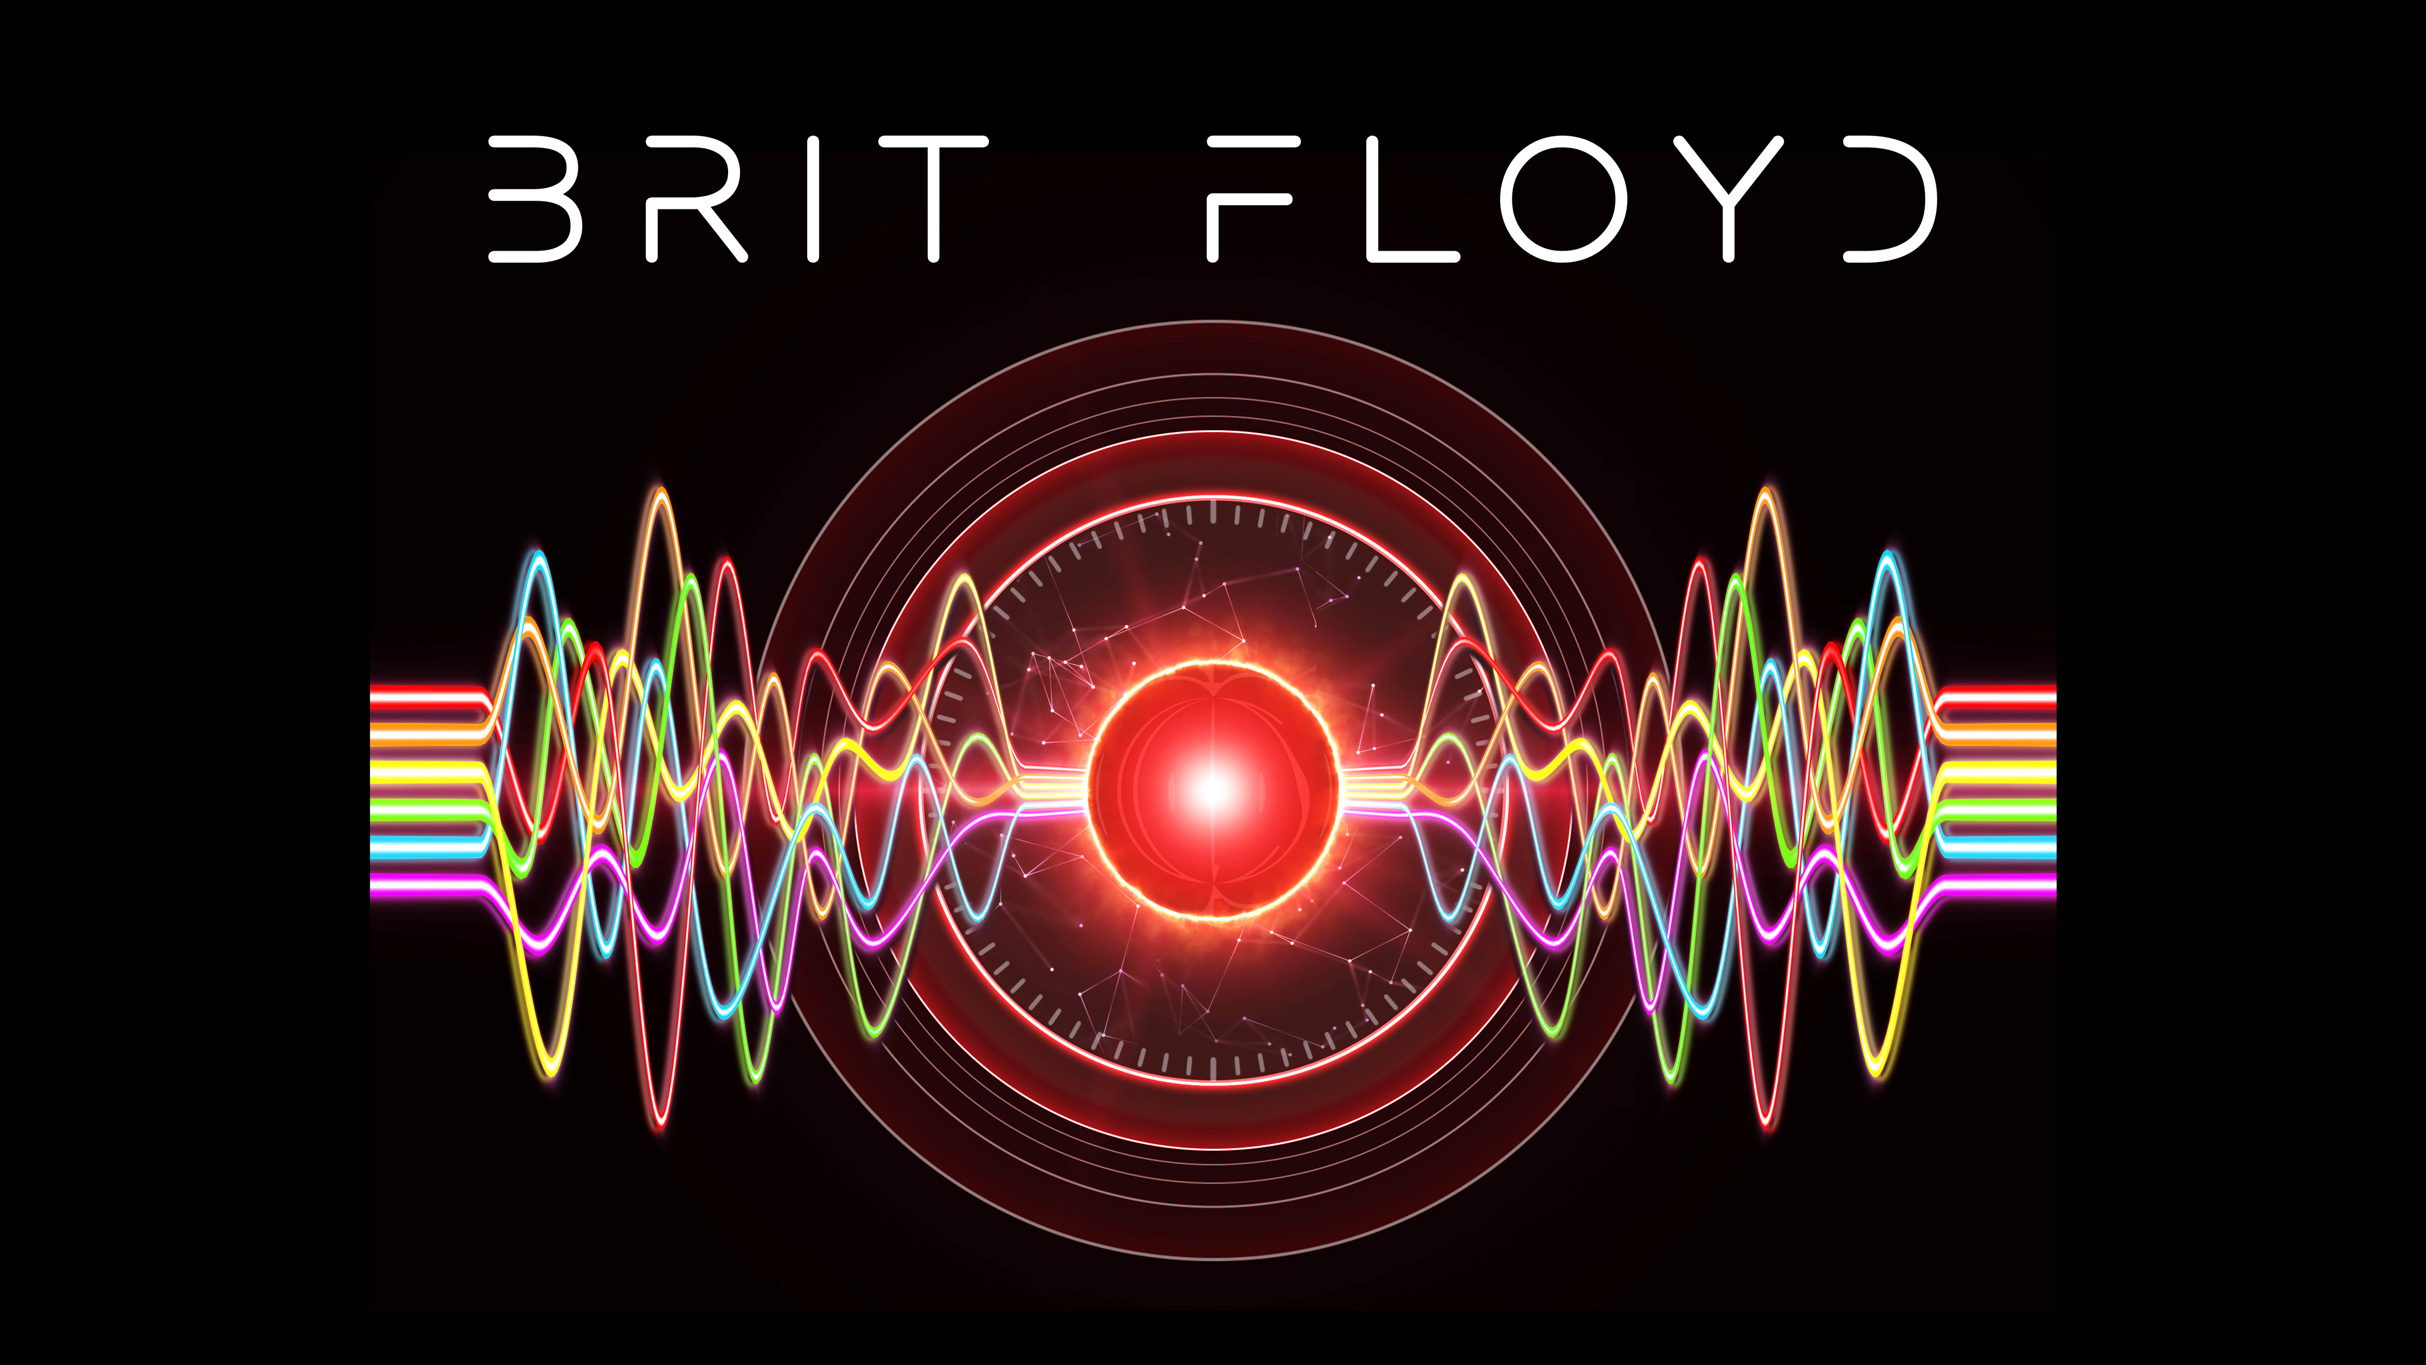 Brit Floyd: The World's Greatest Pink Floyd Show